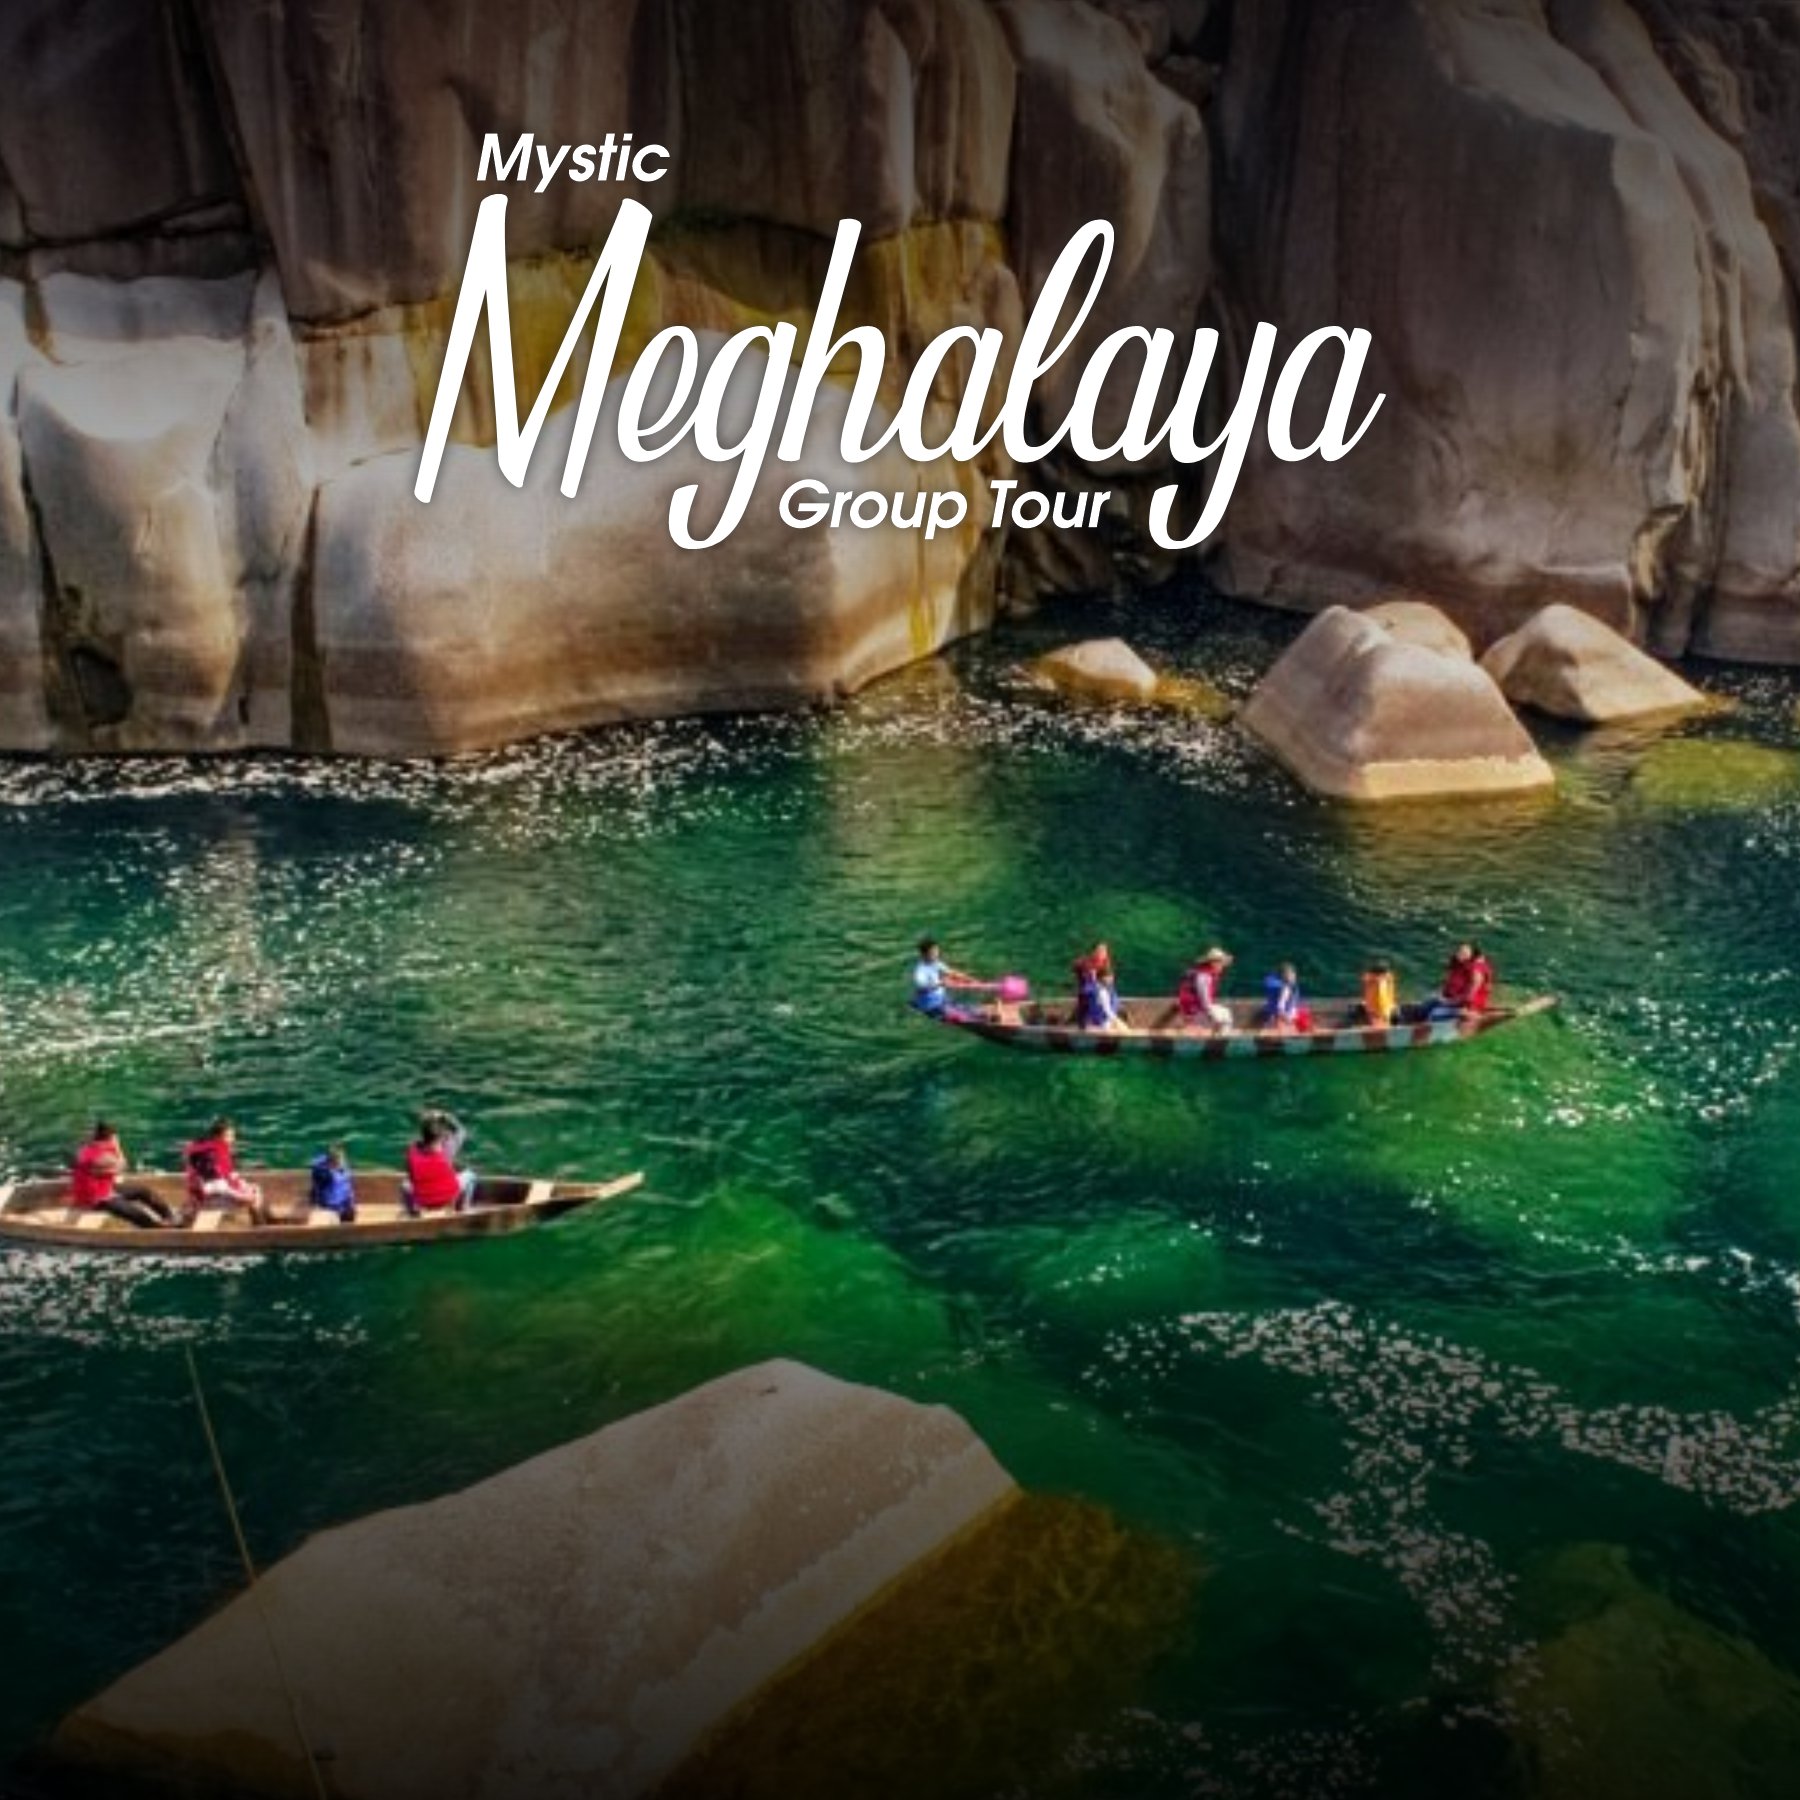 Mysic Meghalaya Tour with economads, Guwahati, Meghalaya, India